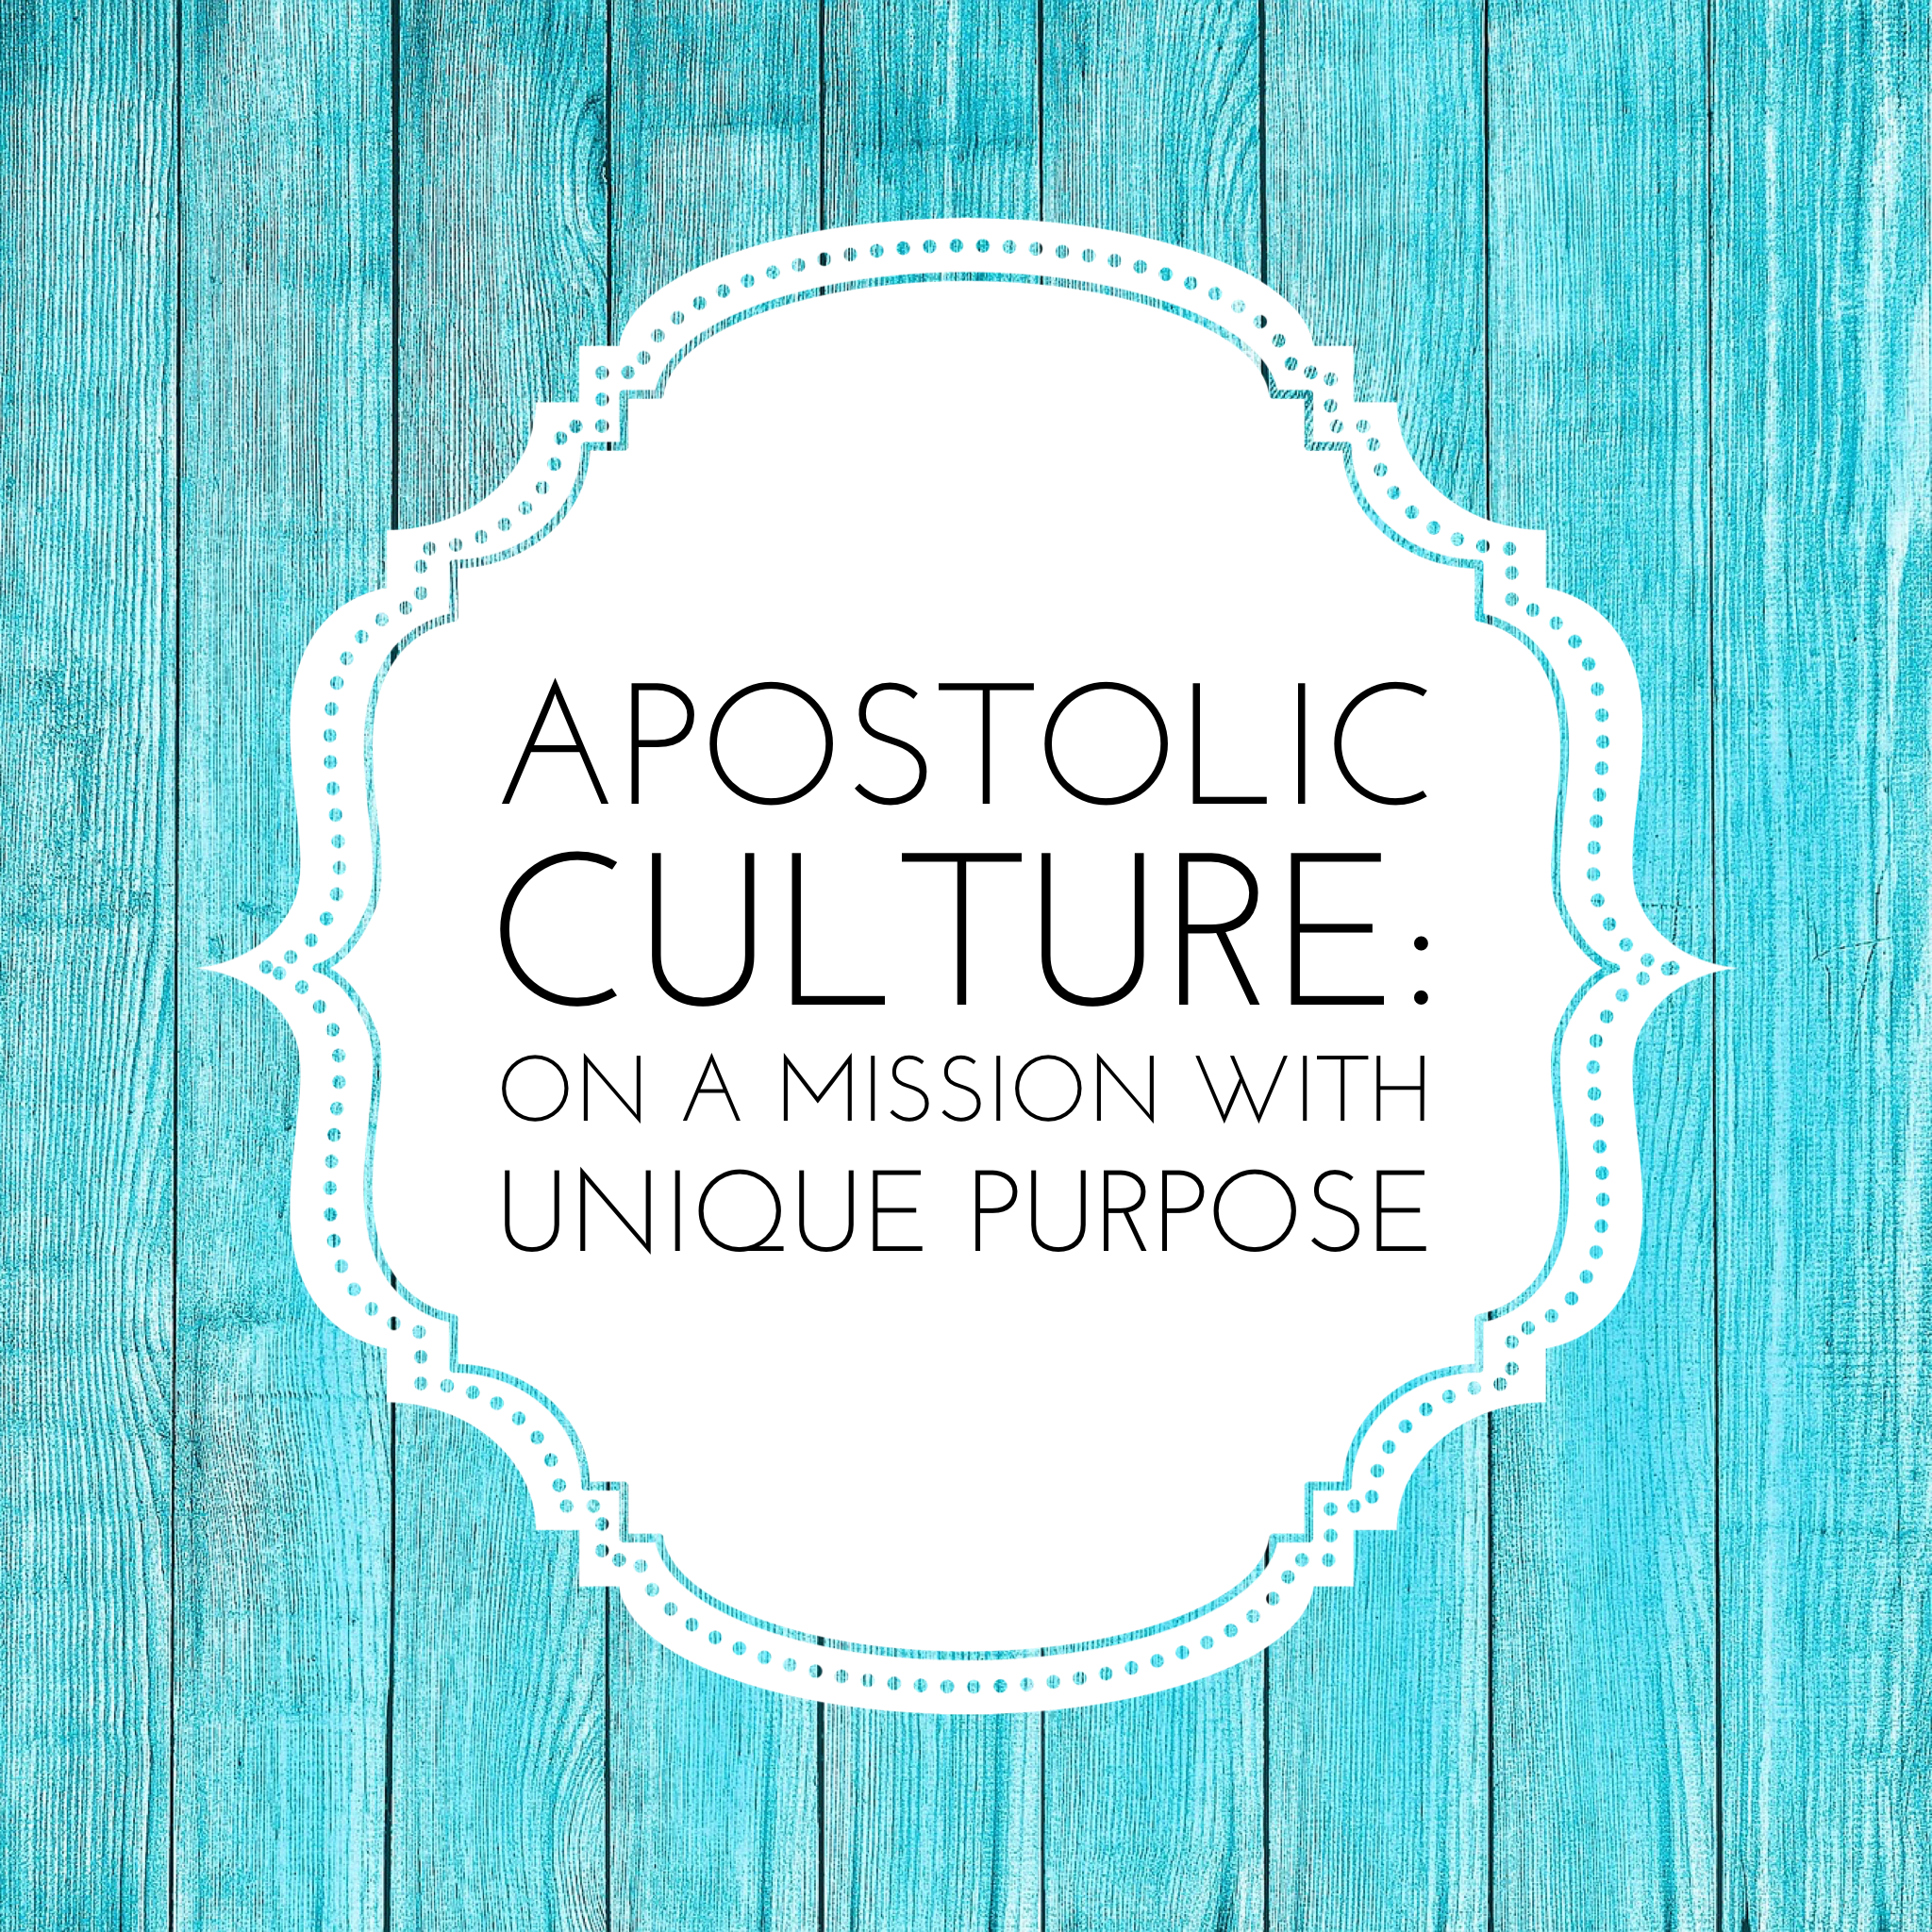 Apostolic Culture: On a Mission with Unique Purpose - 3/12/19